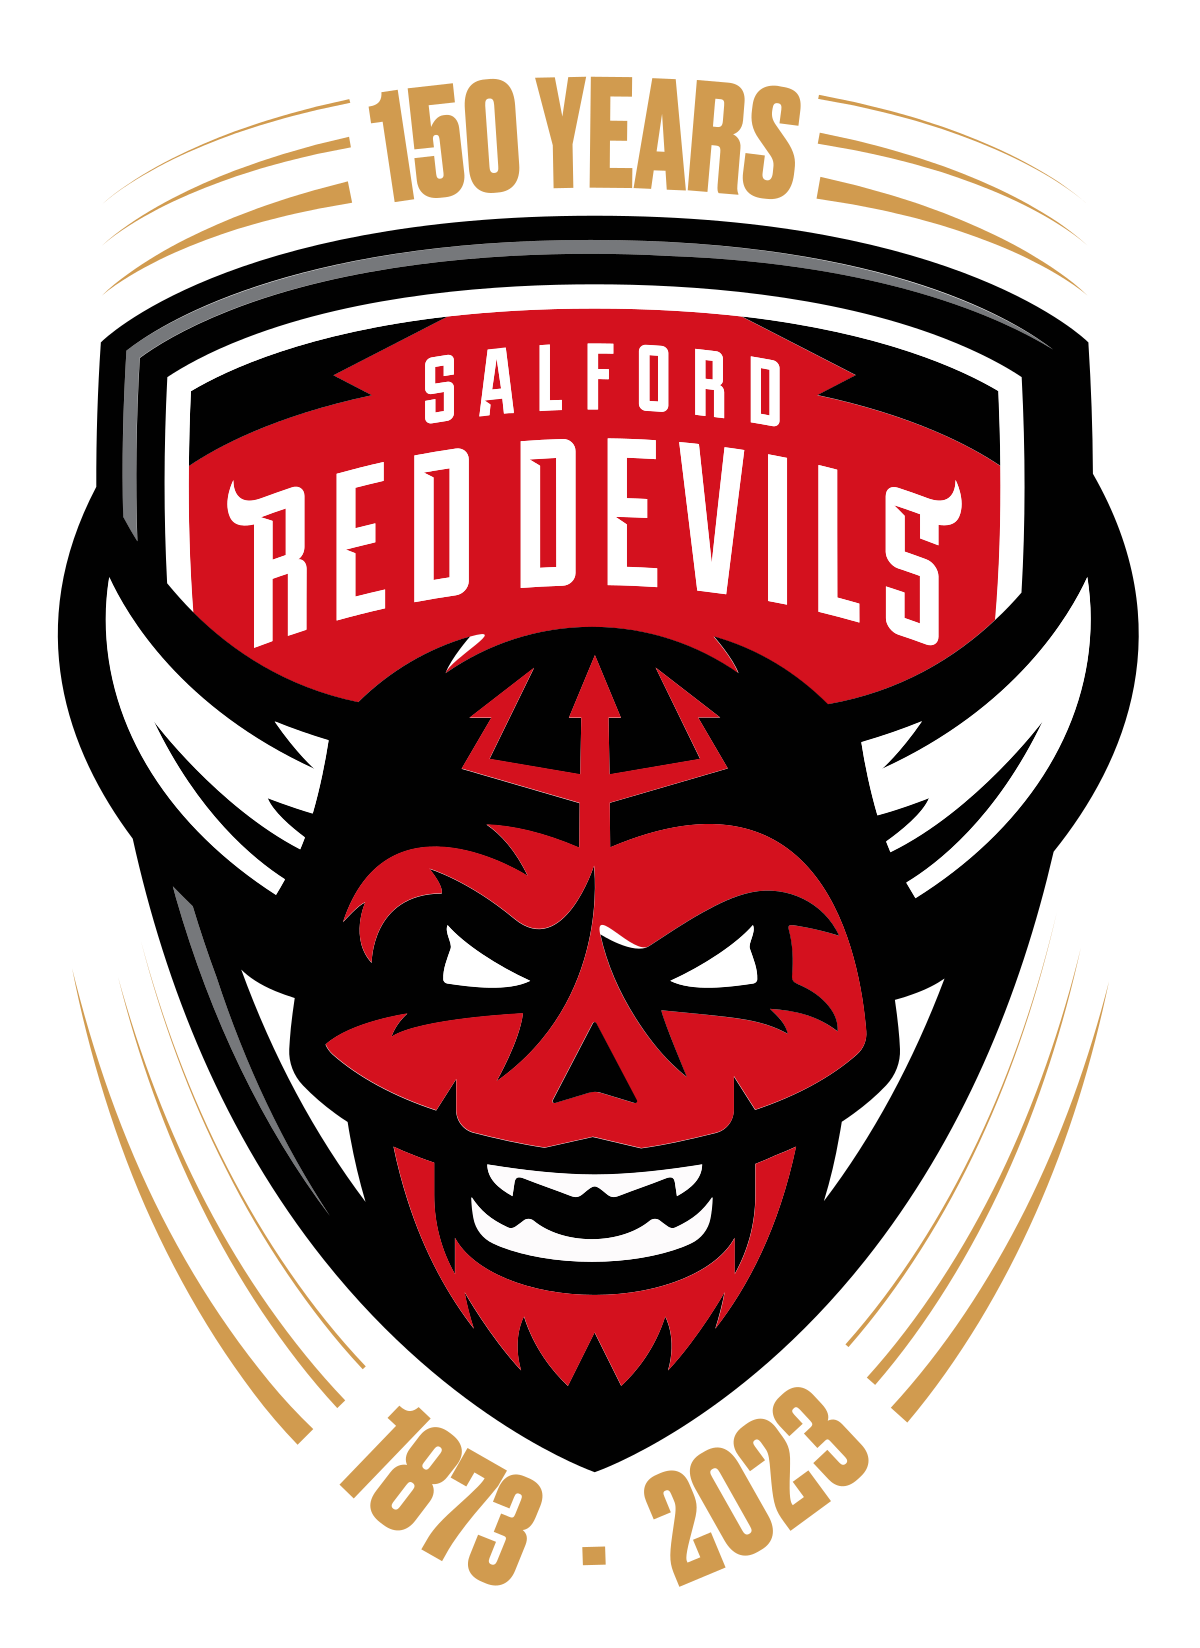 Salford Red Devils - Wikipedia